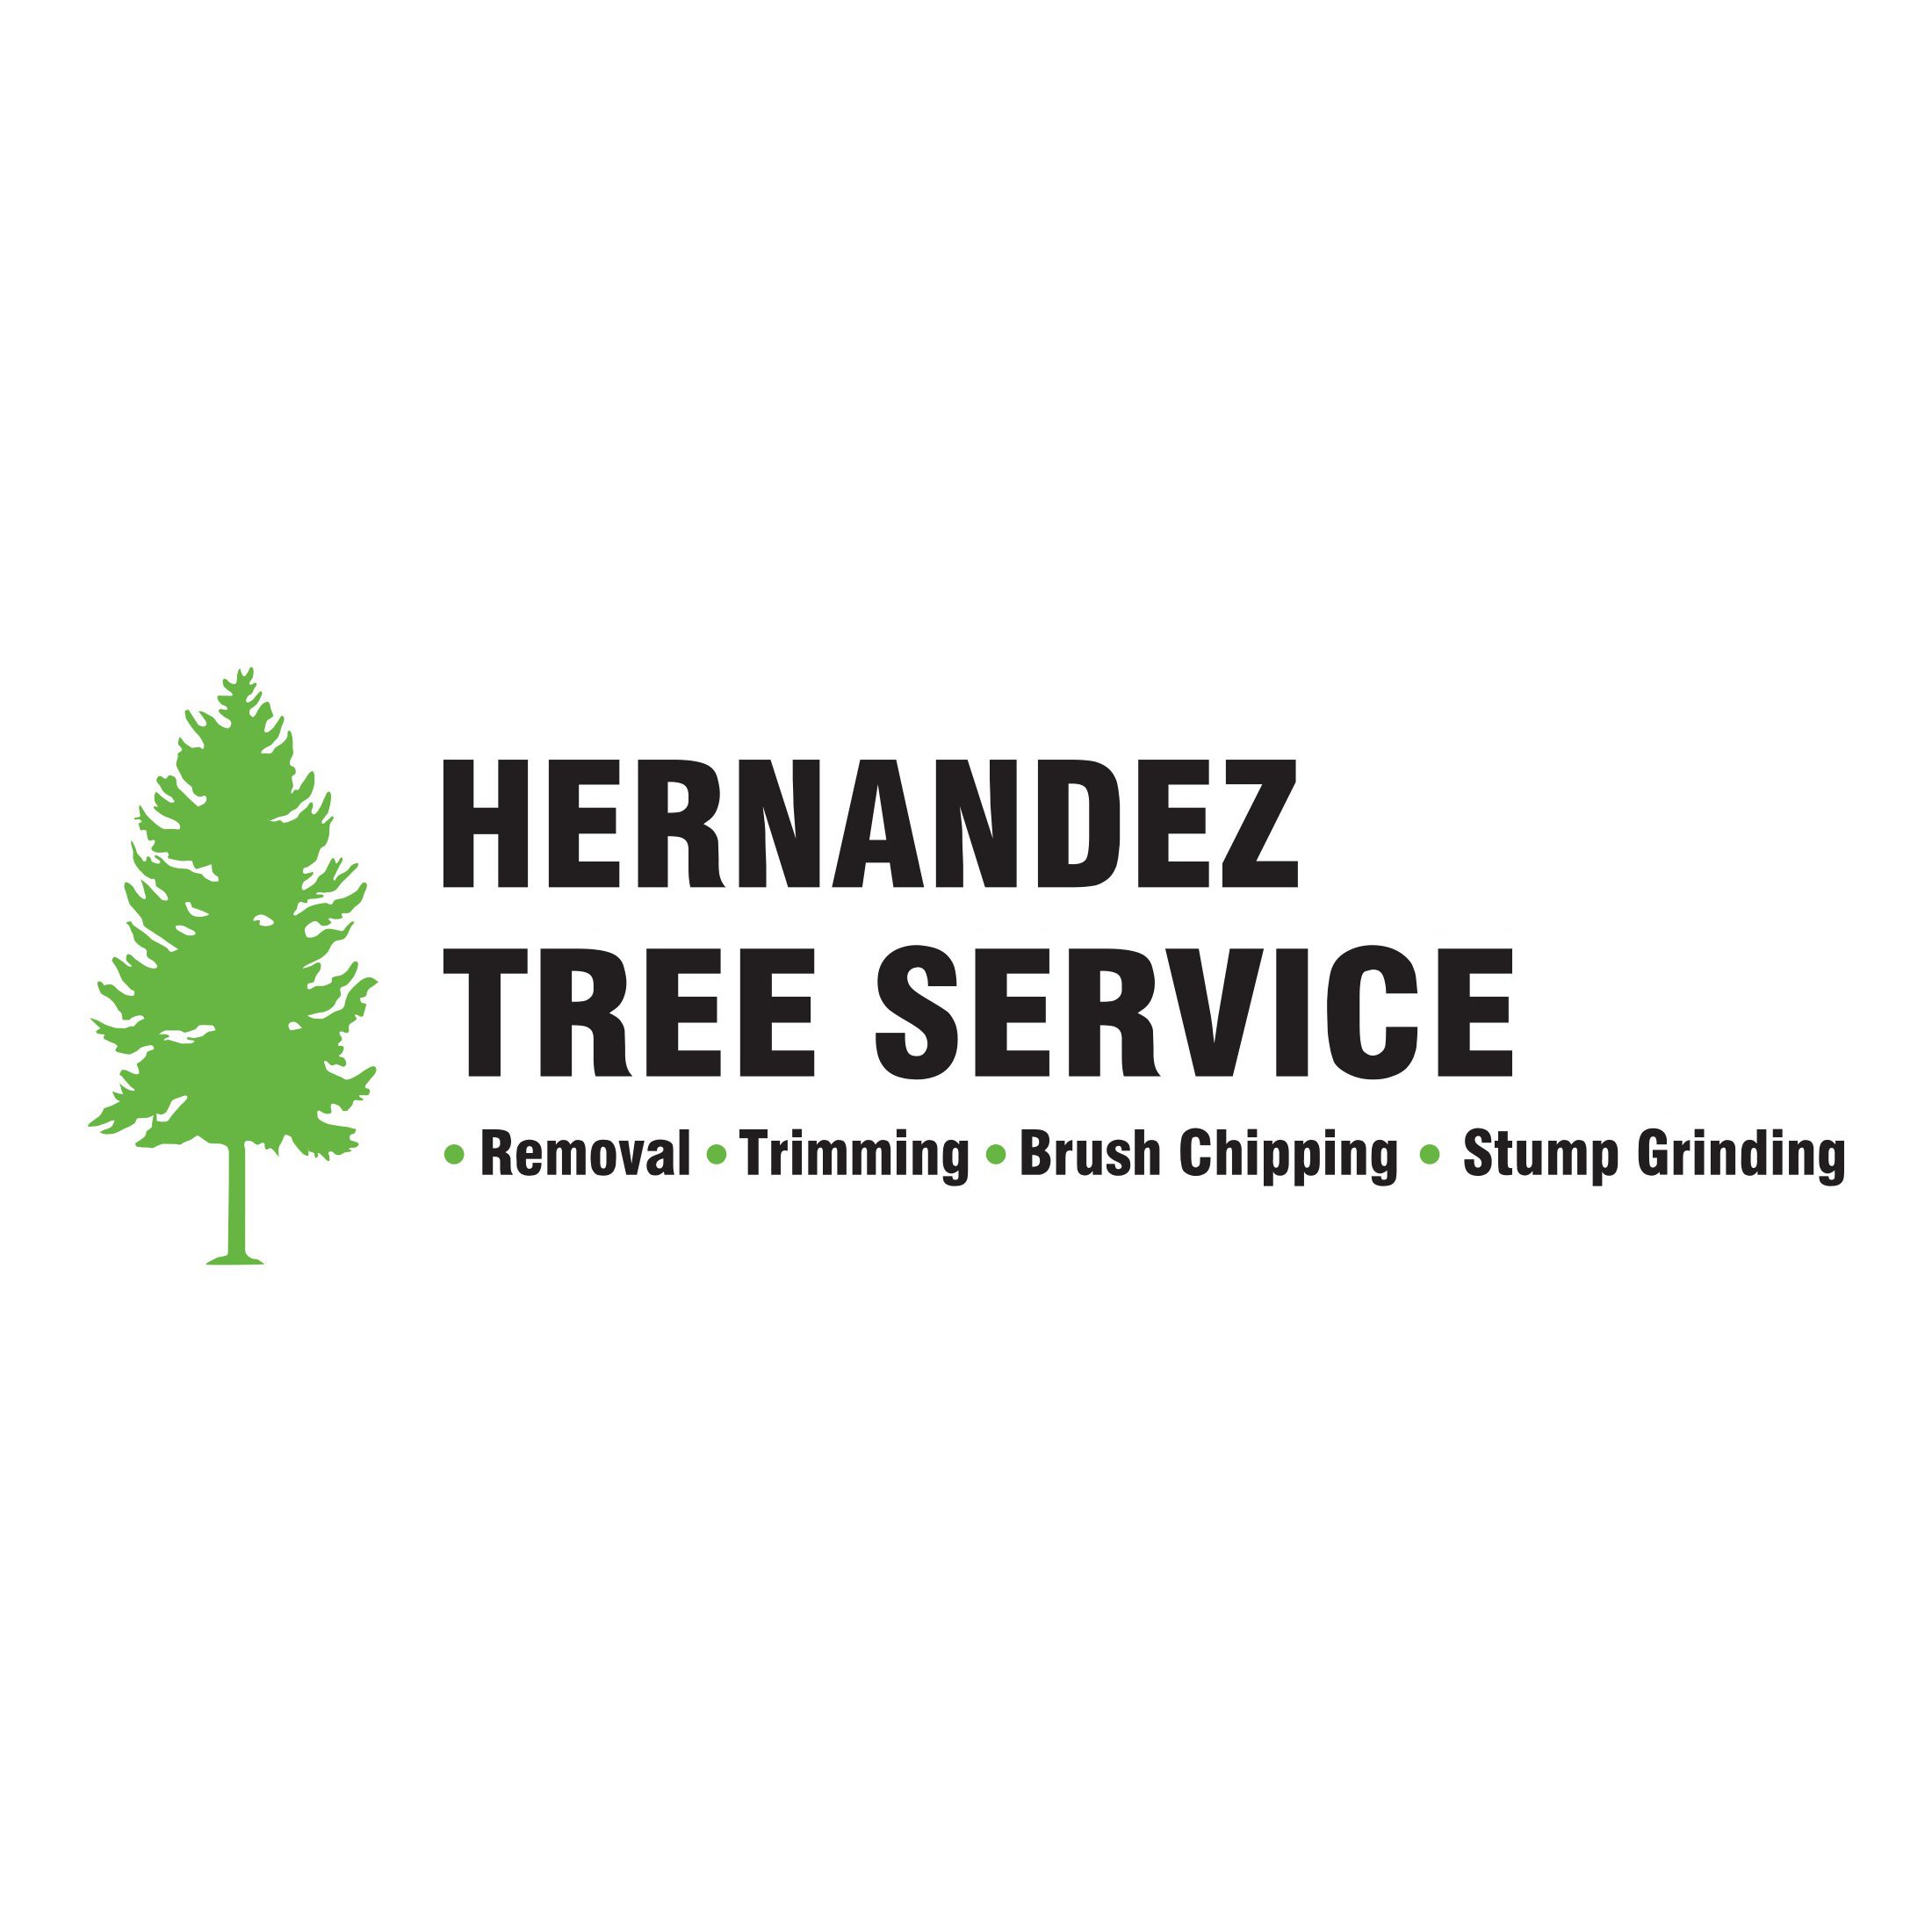 Hernandez Tree Service - Castro Valley, CA - (510)415-0342 | ShowMeLocal.com